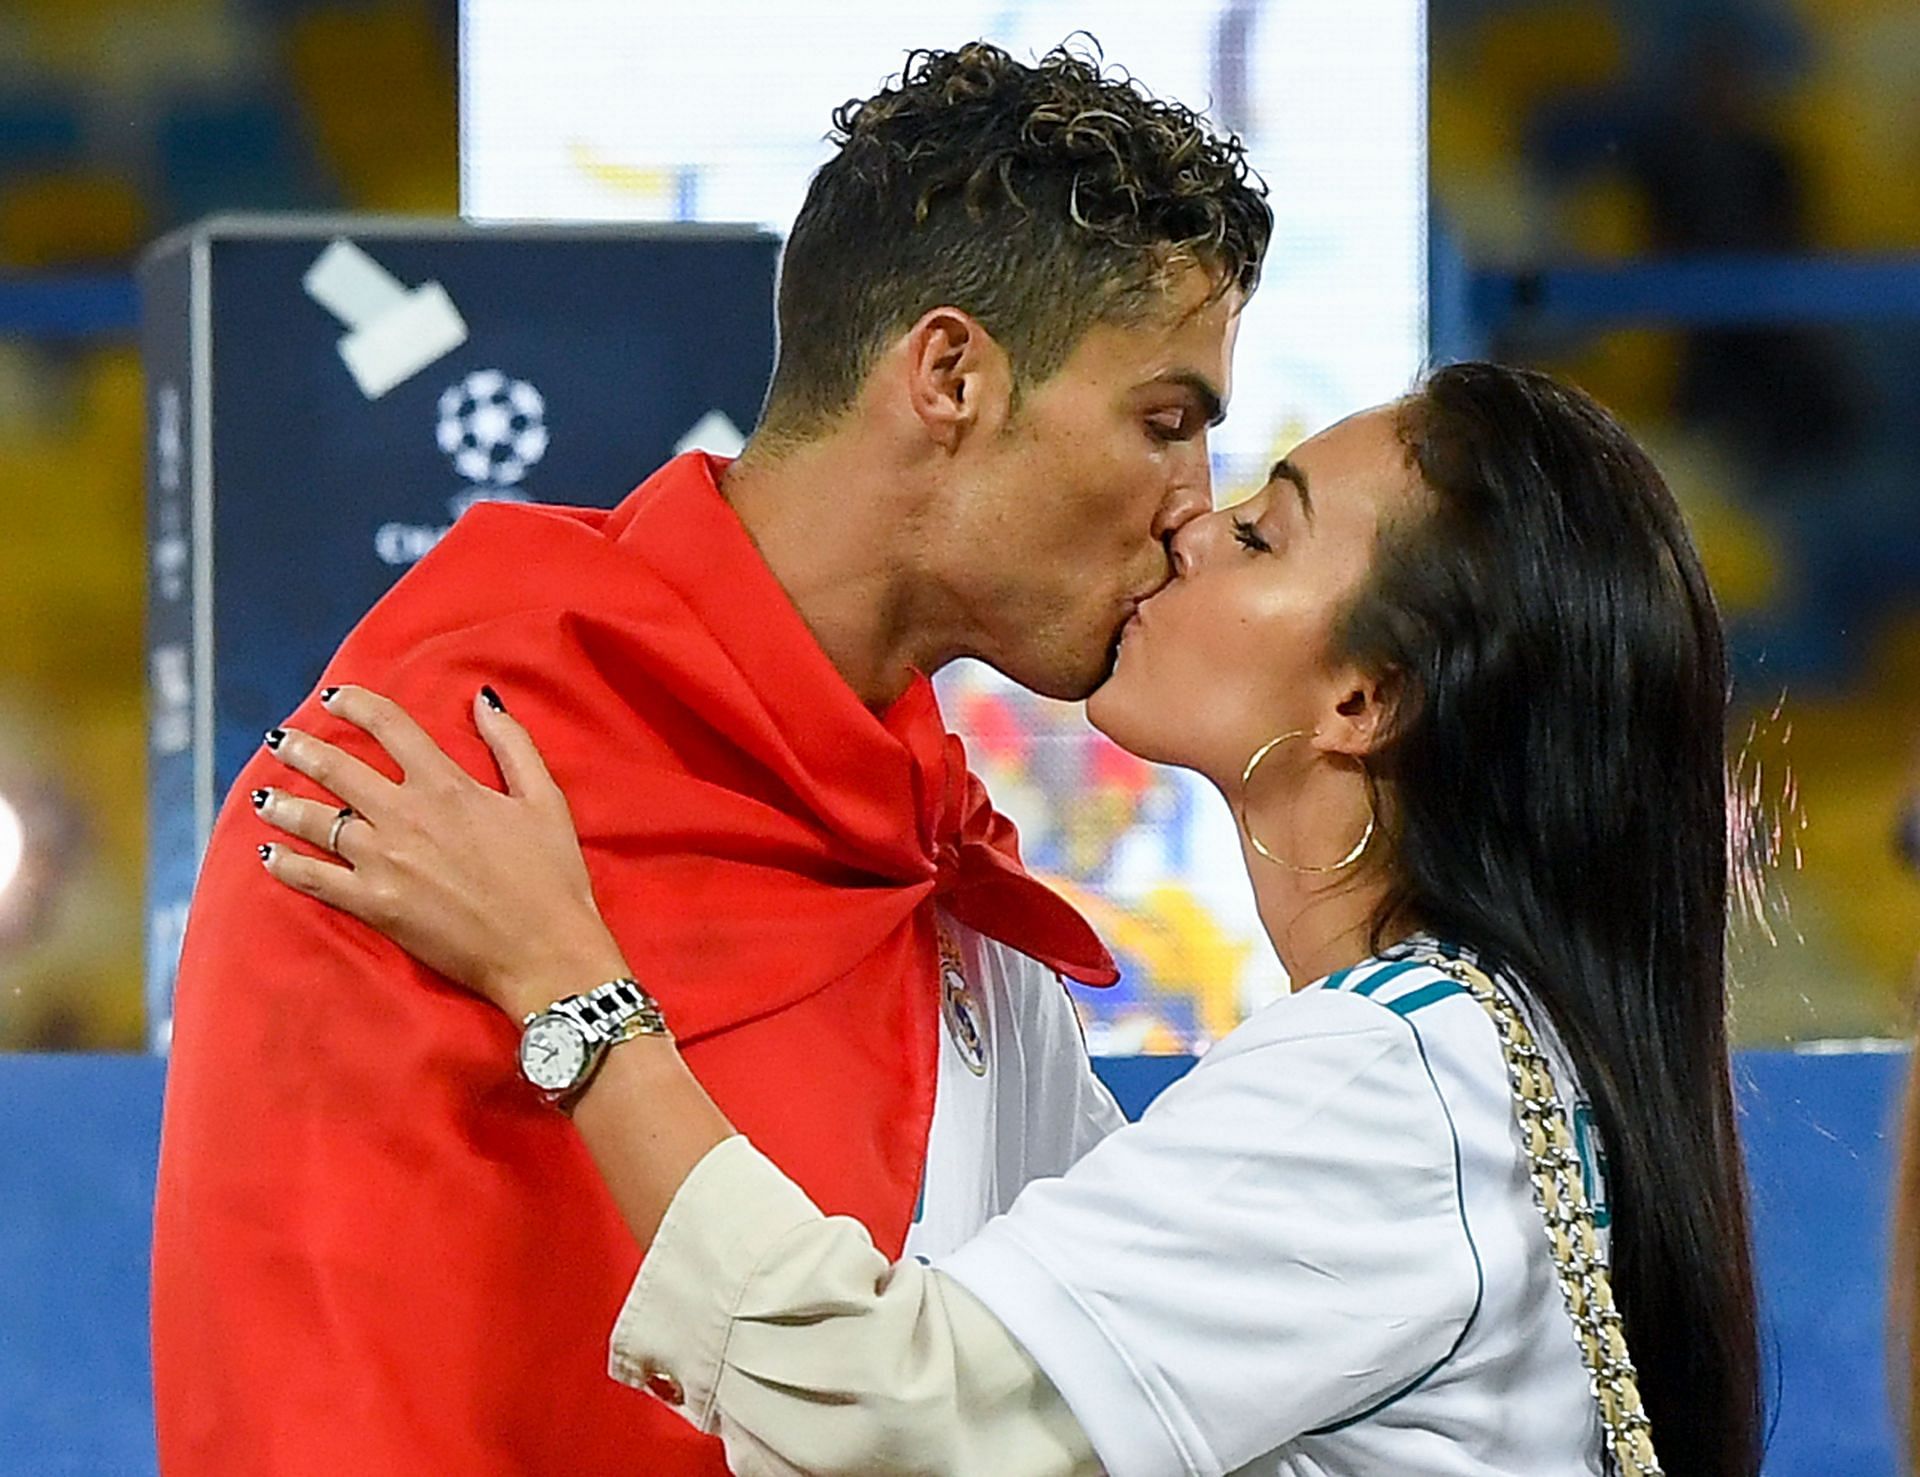 Cristiano Ronaldo and Georgina Rodriguez are loved up in Riyadh.